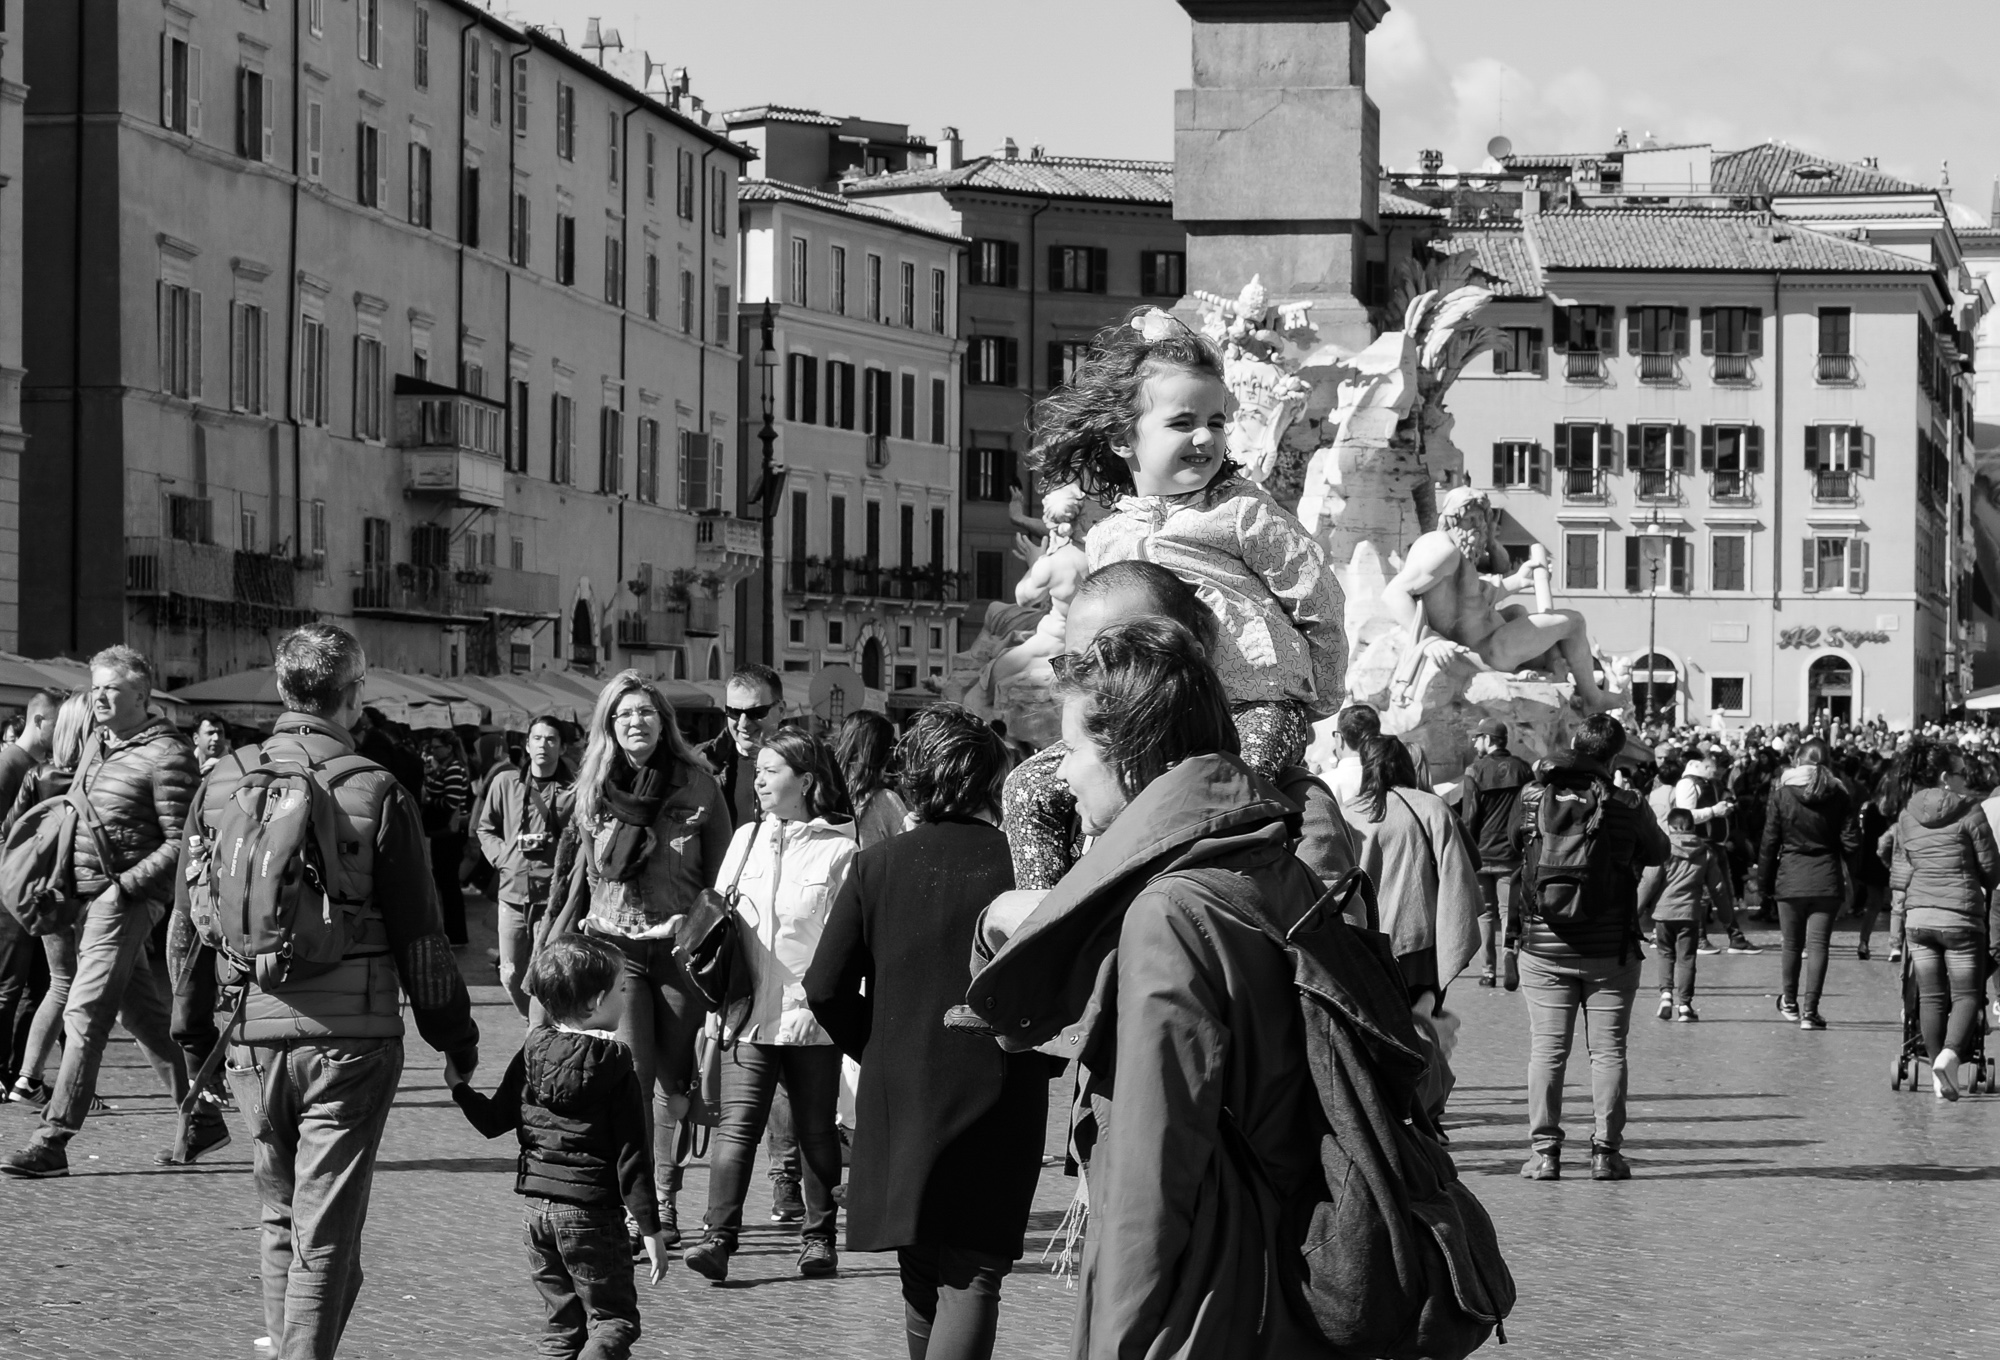 People Piazza Navona, 2018